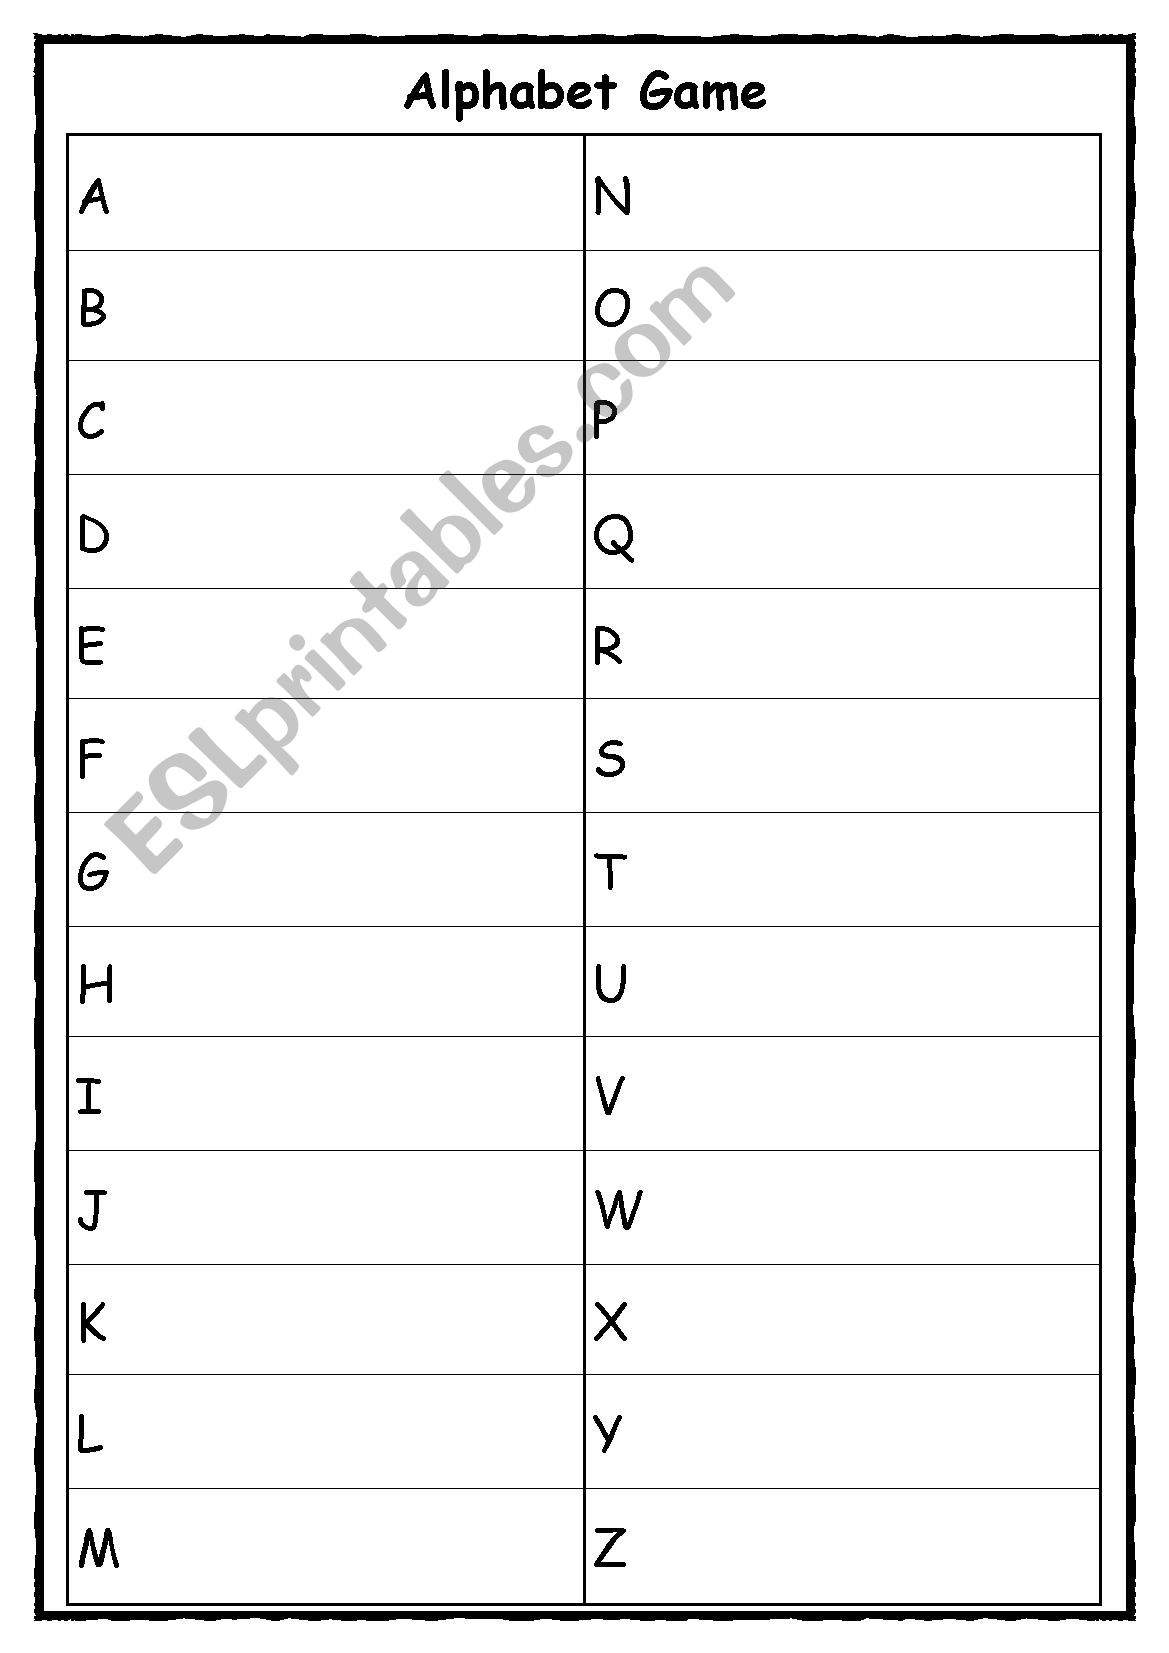 Alphabet Game worksheet